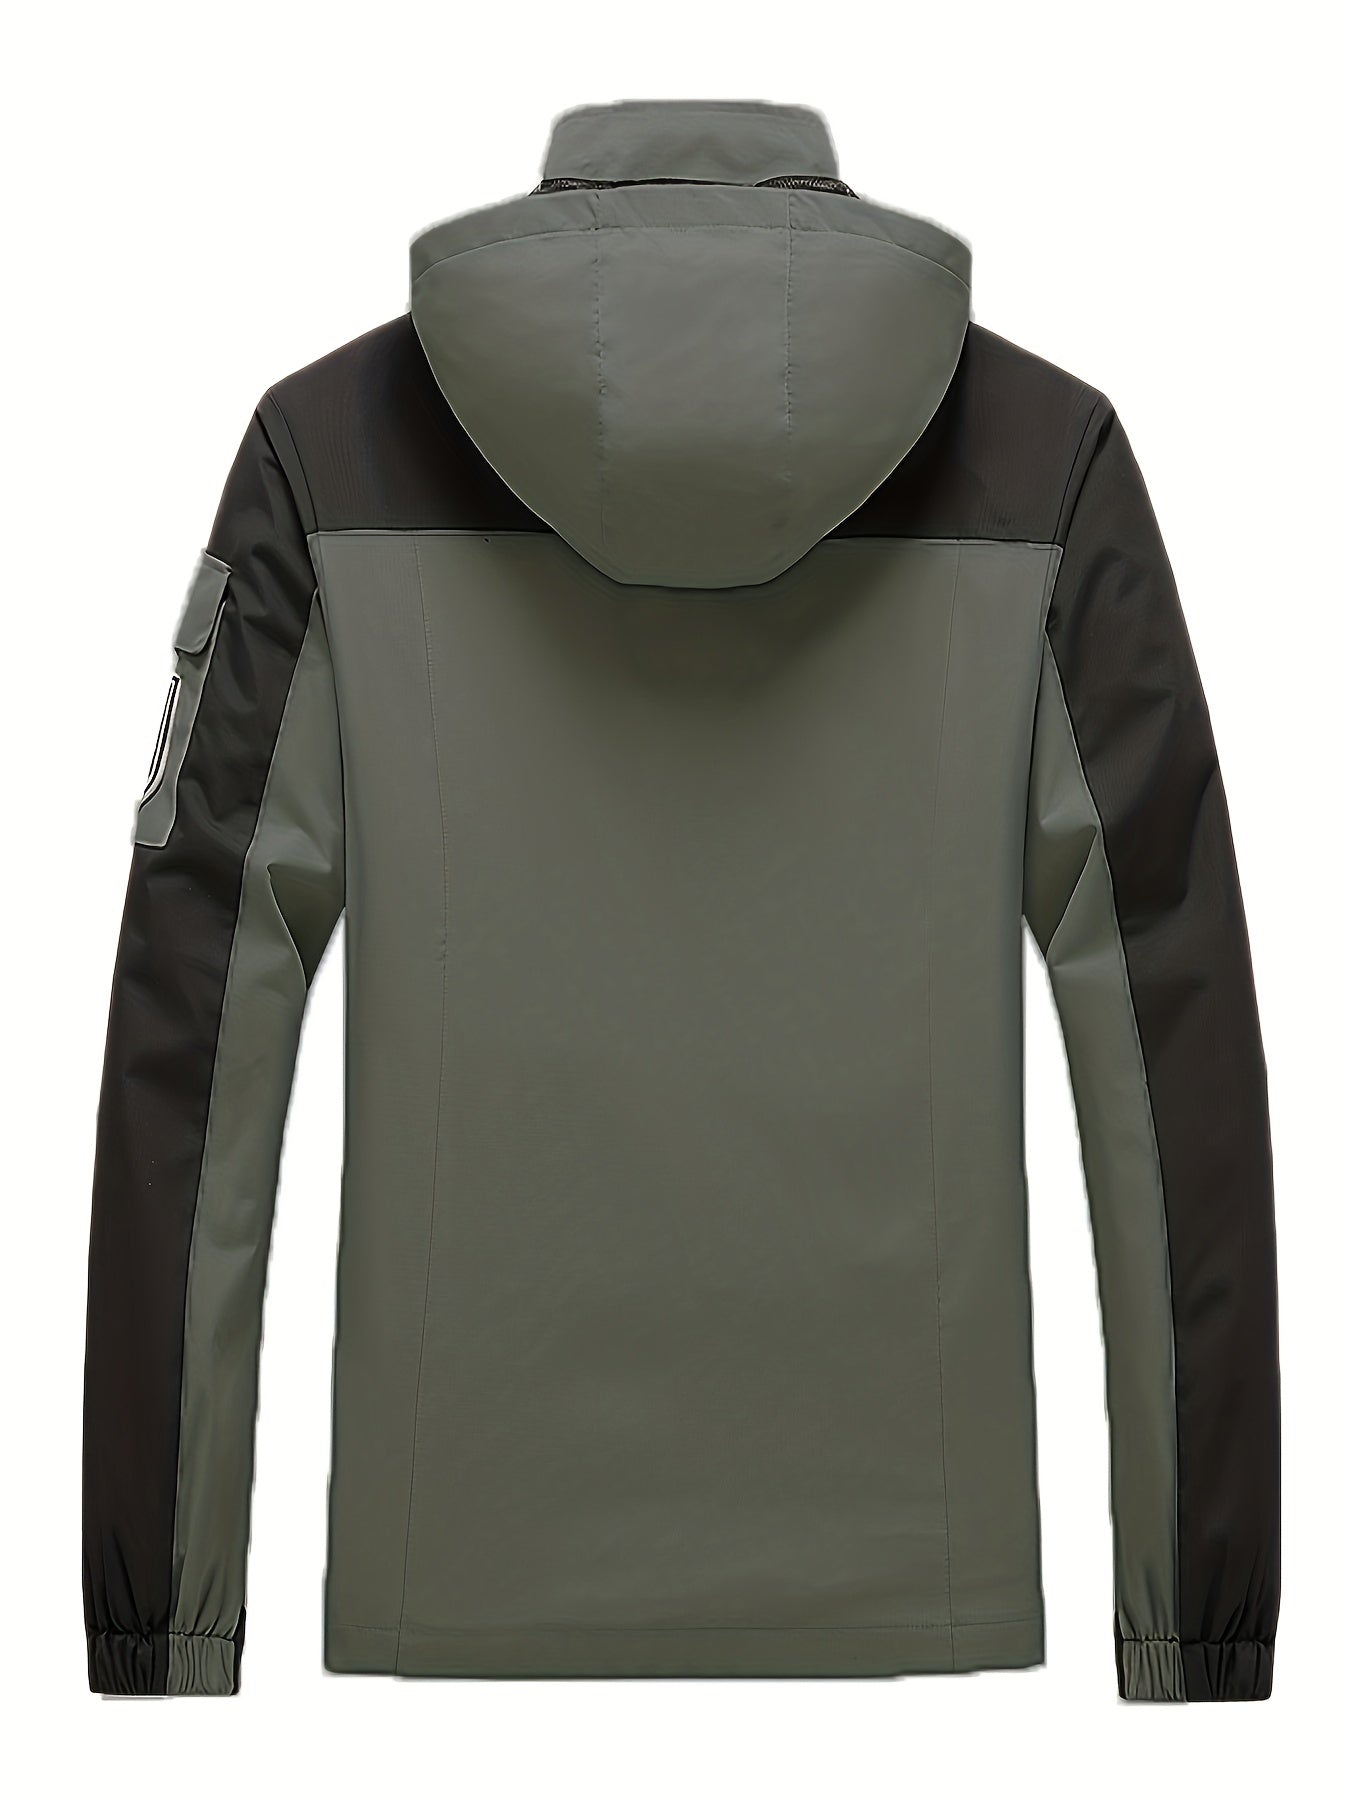 Men's Casual Waterproof Windbreaker Jacket Hooded Coat Regular Fit Coat For Spring Autumn Outdoors Hiking Fishing